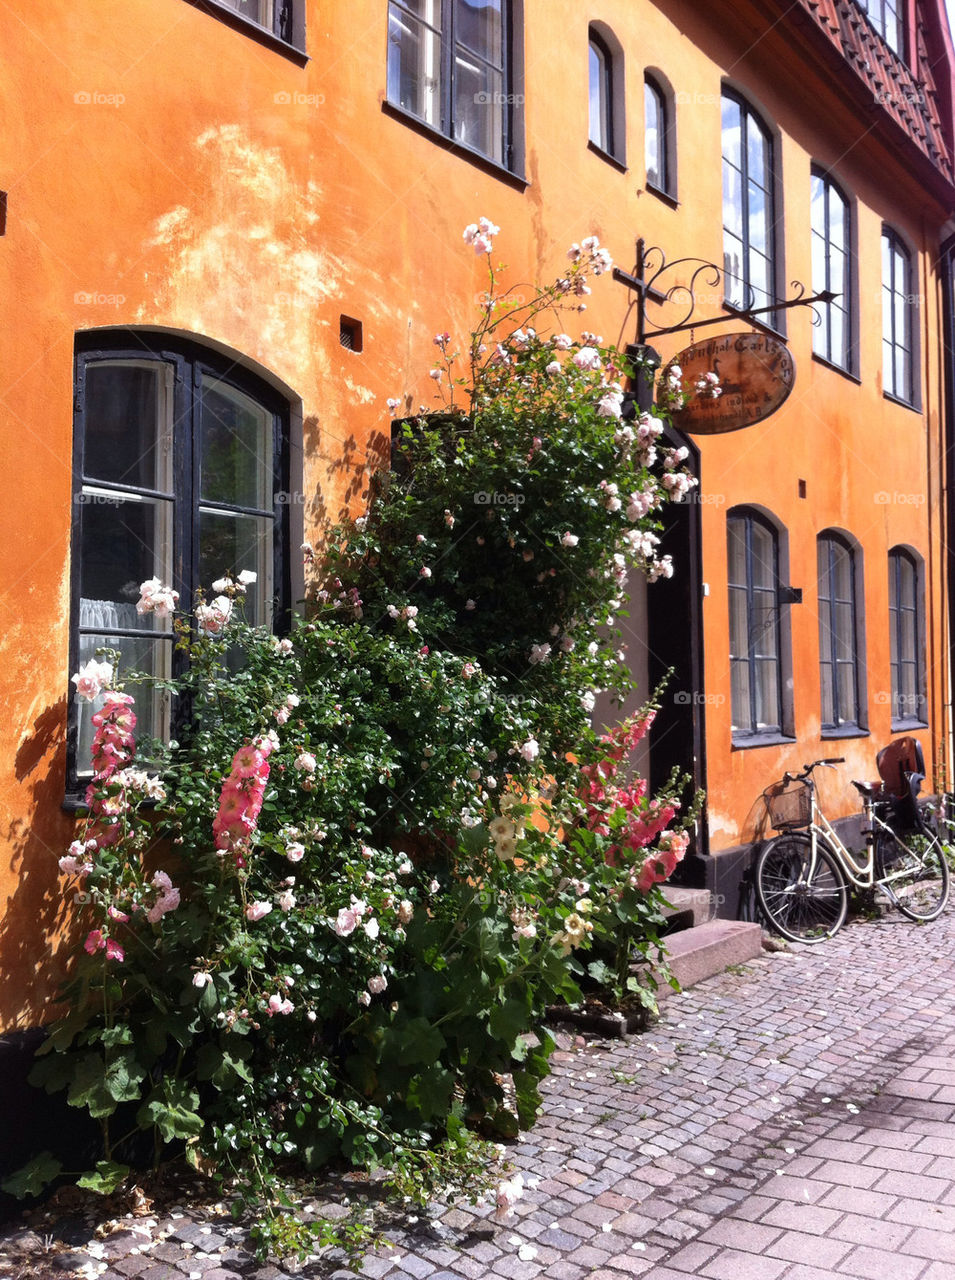 malmö sweden flowers city by tango